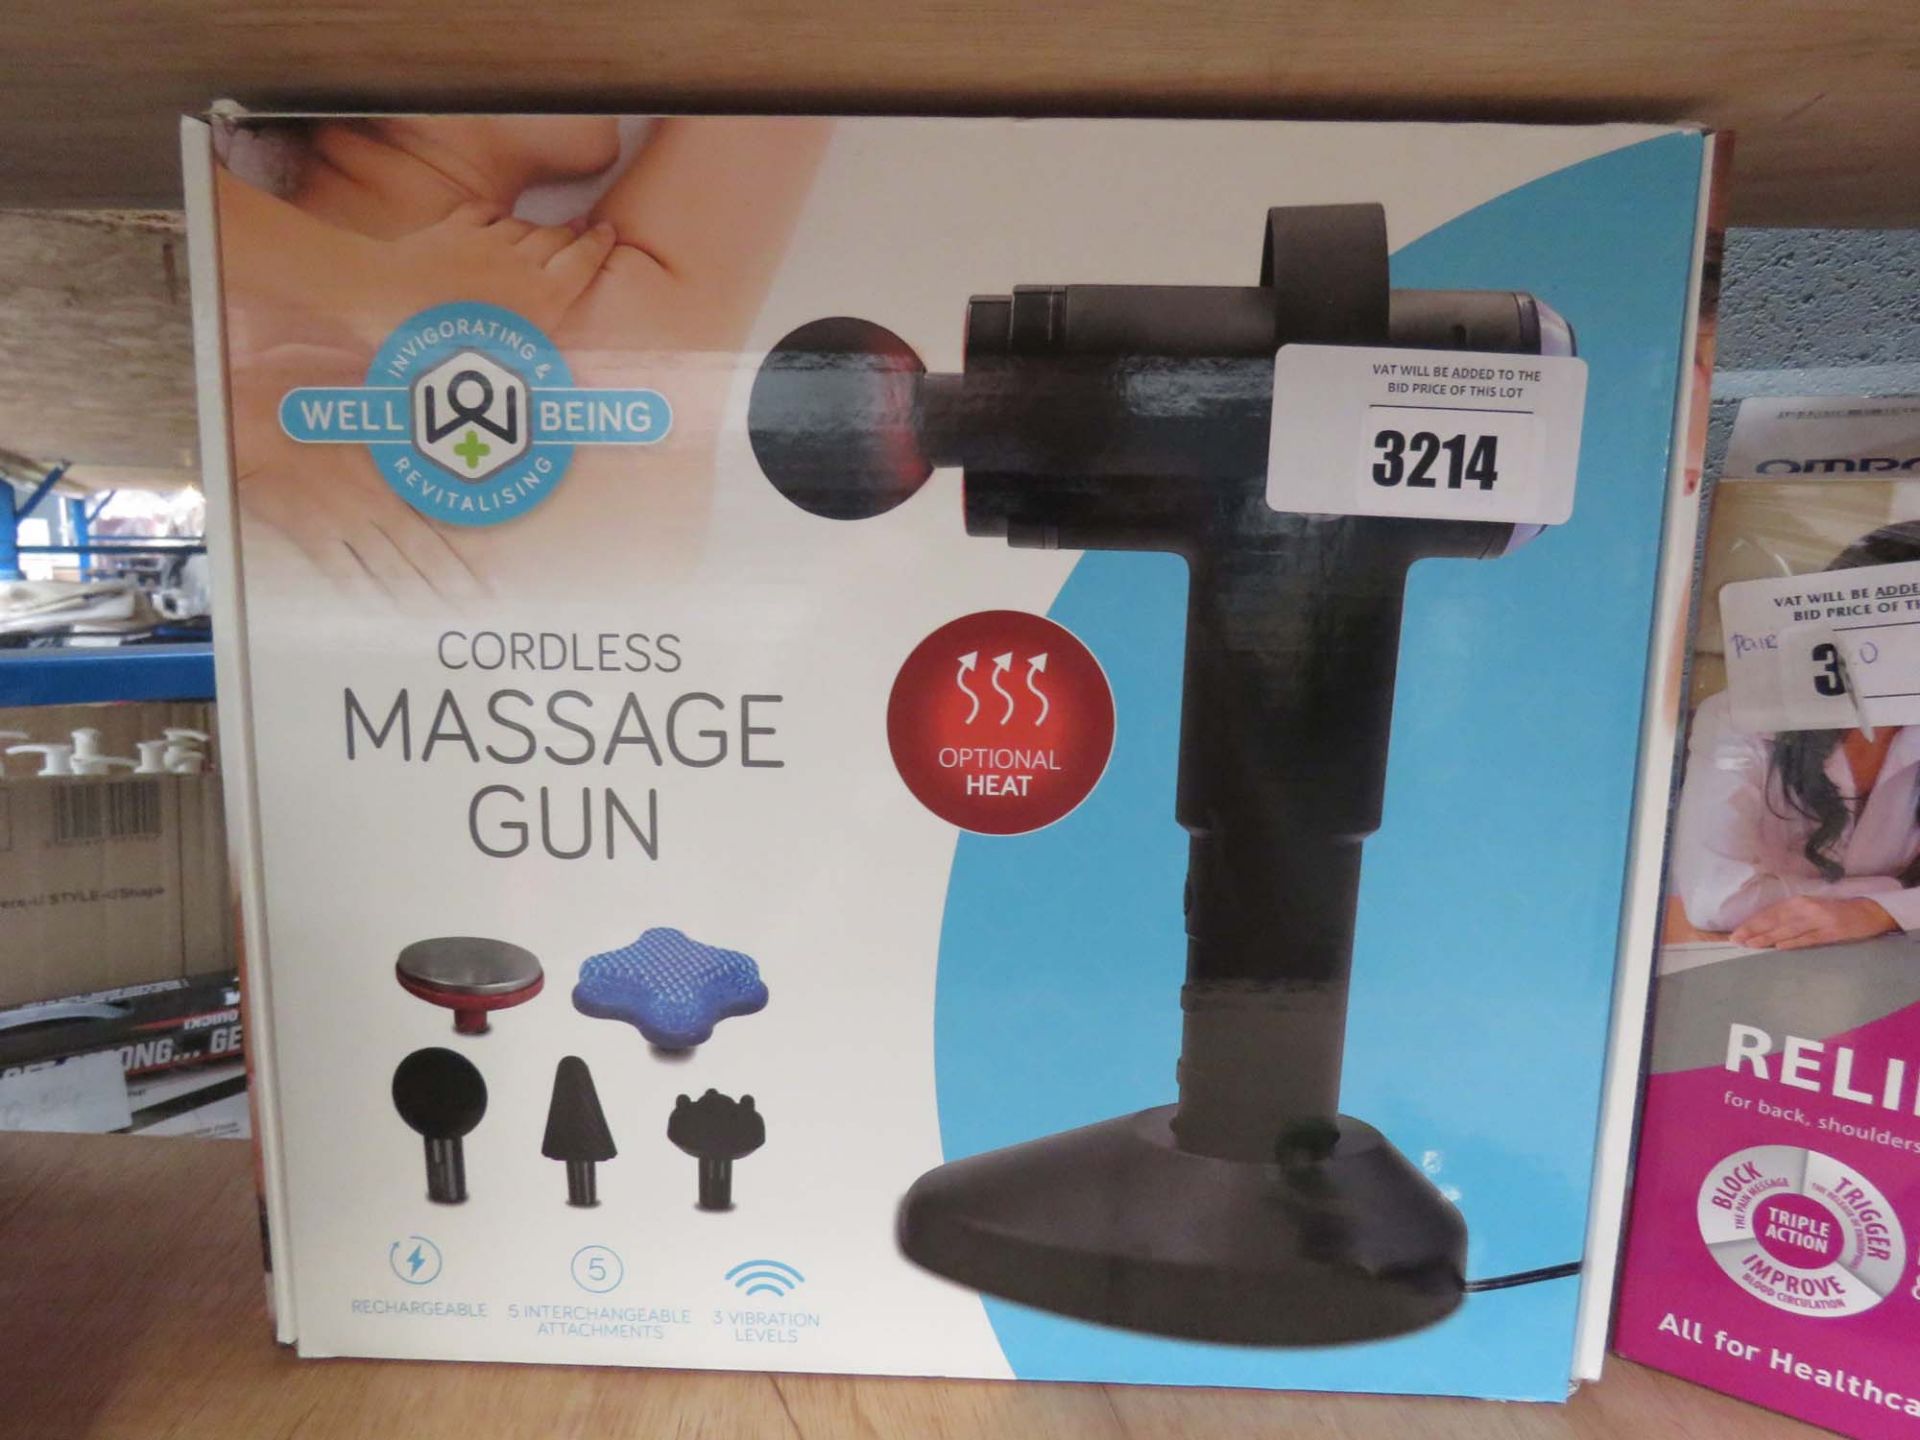 Cordless massage gun